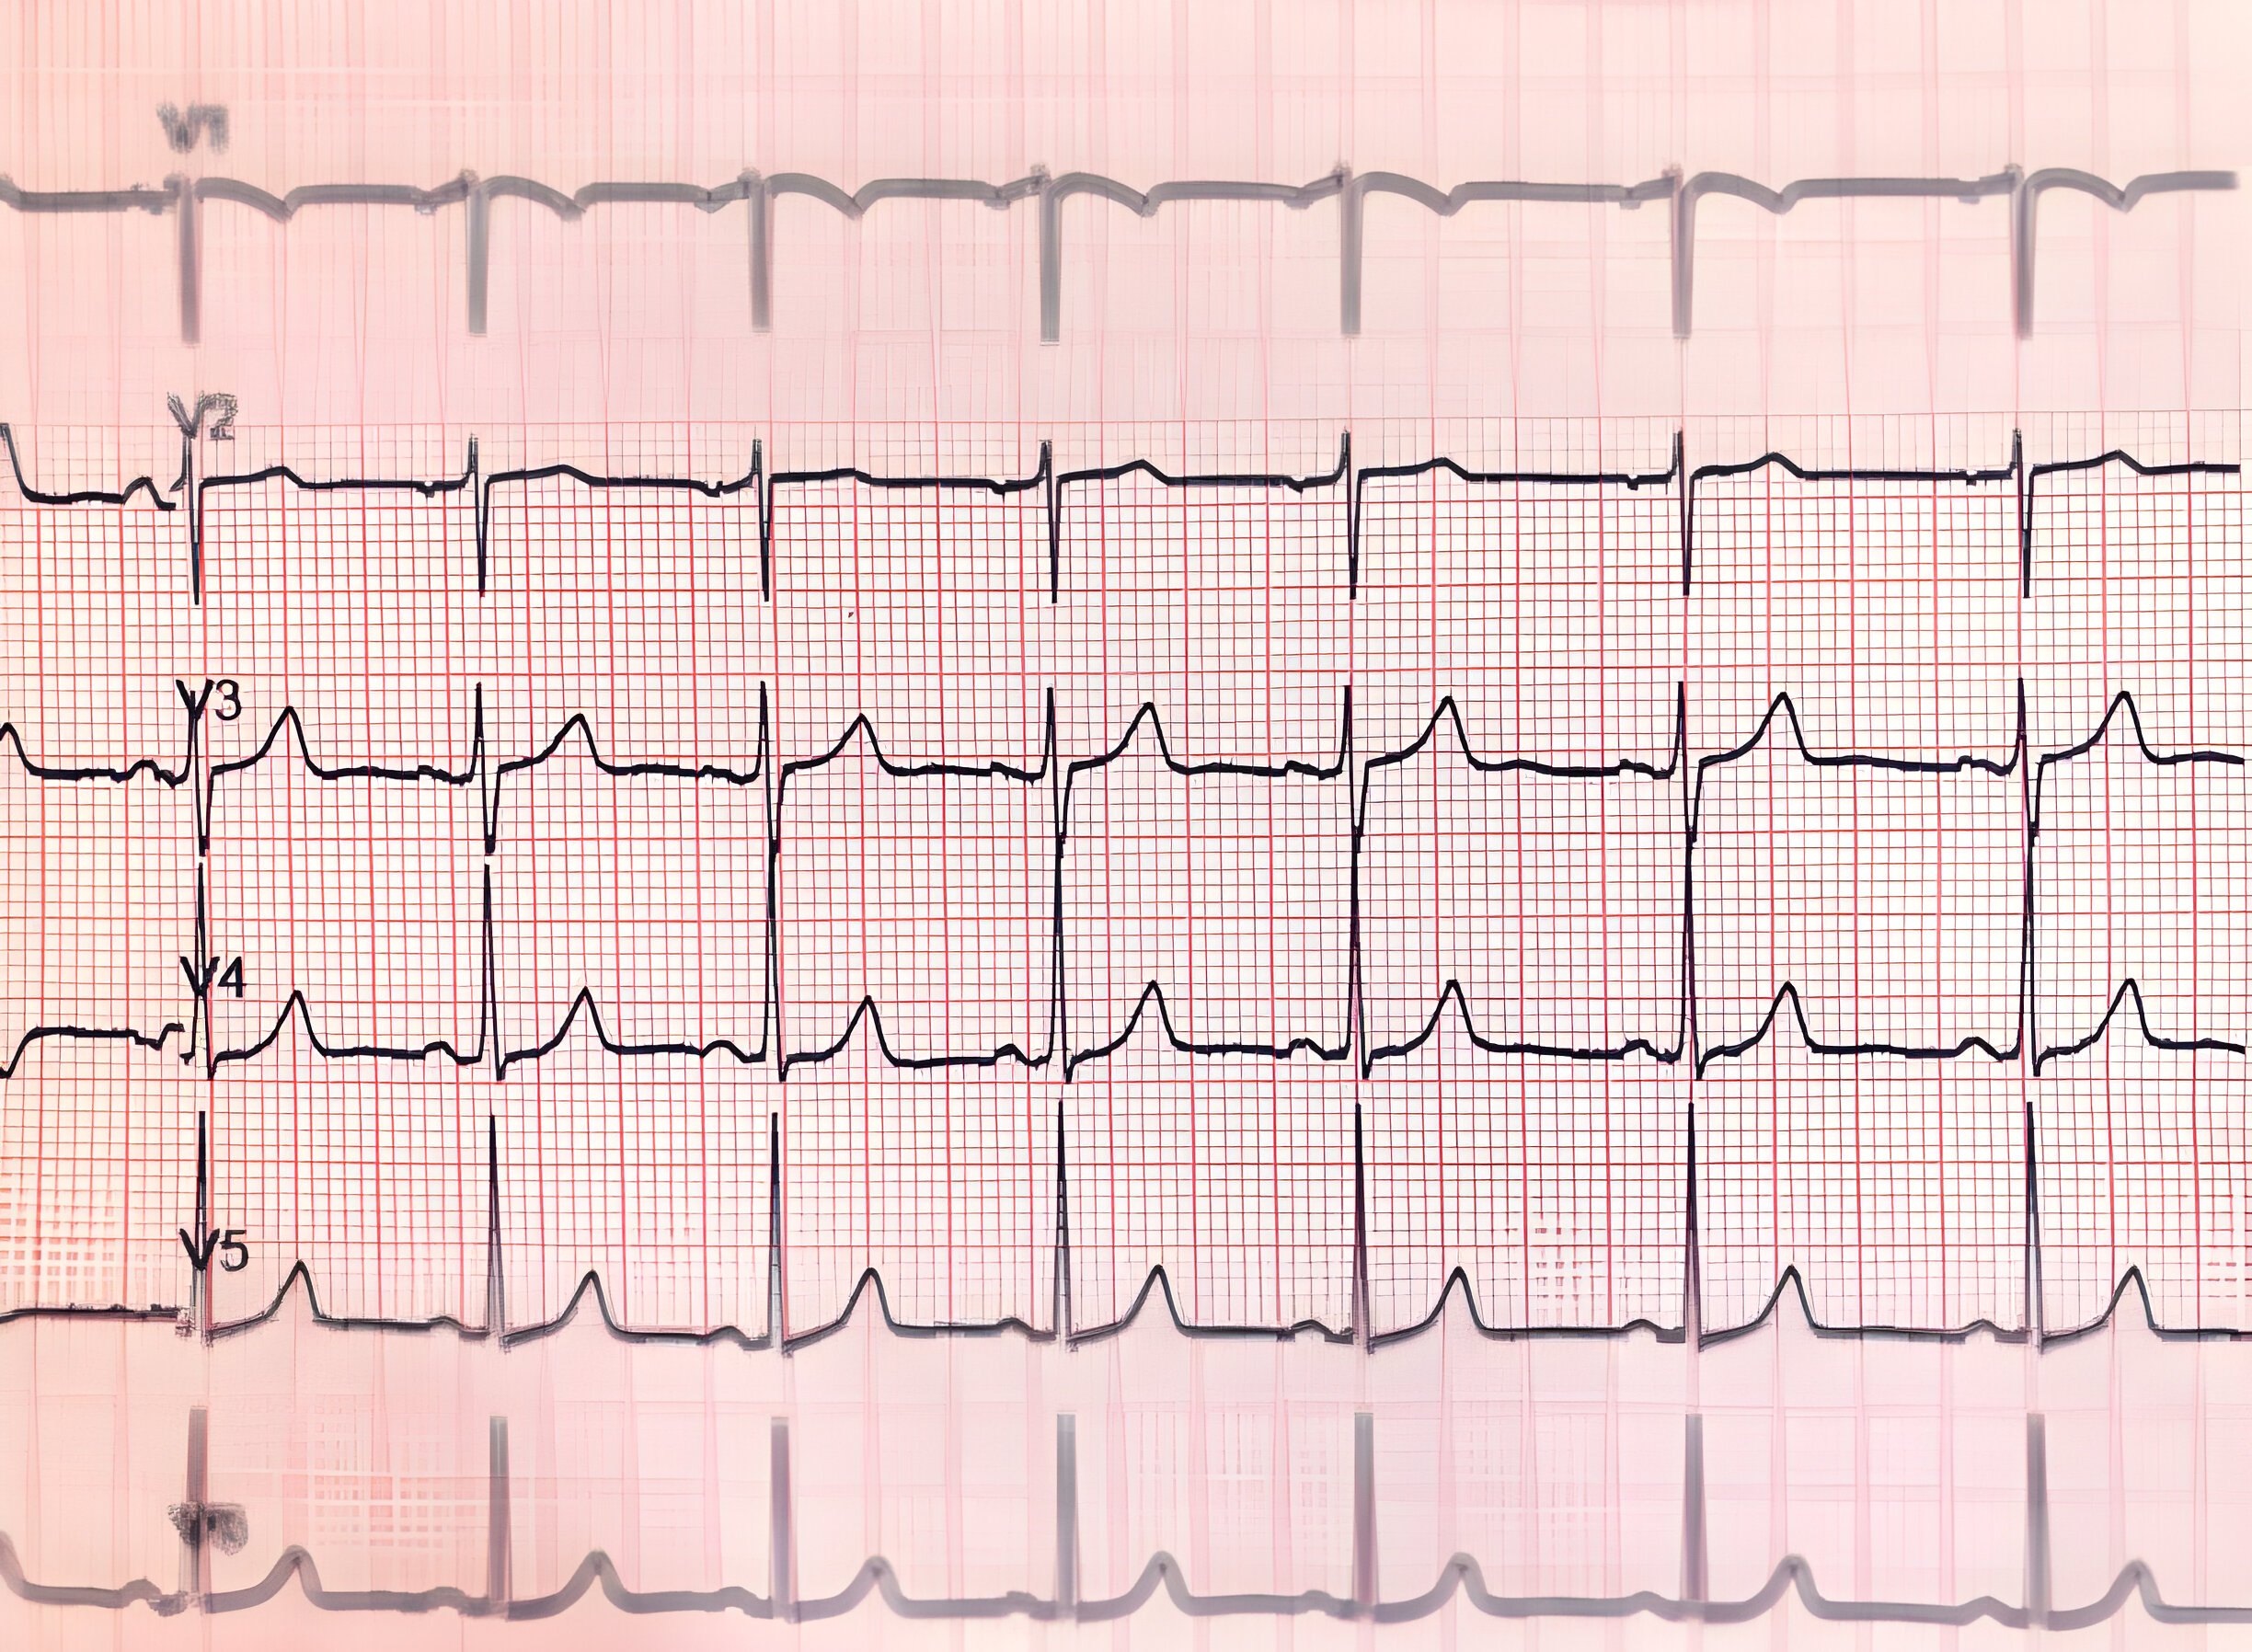 Pulseless Ventricular Tachycardia (VT)